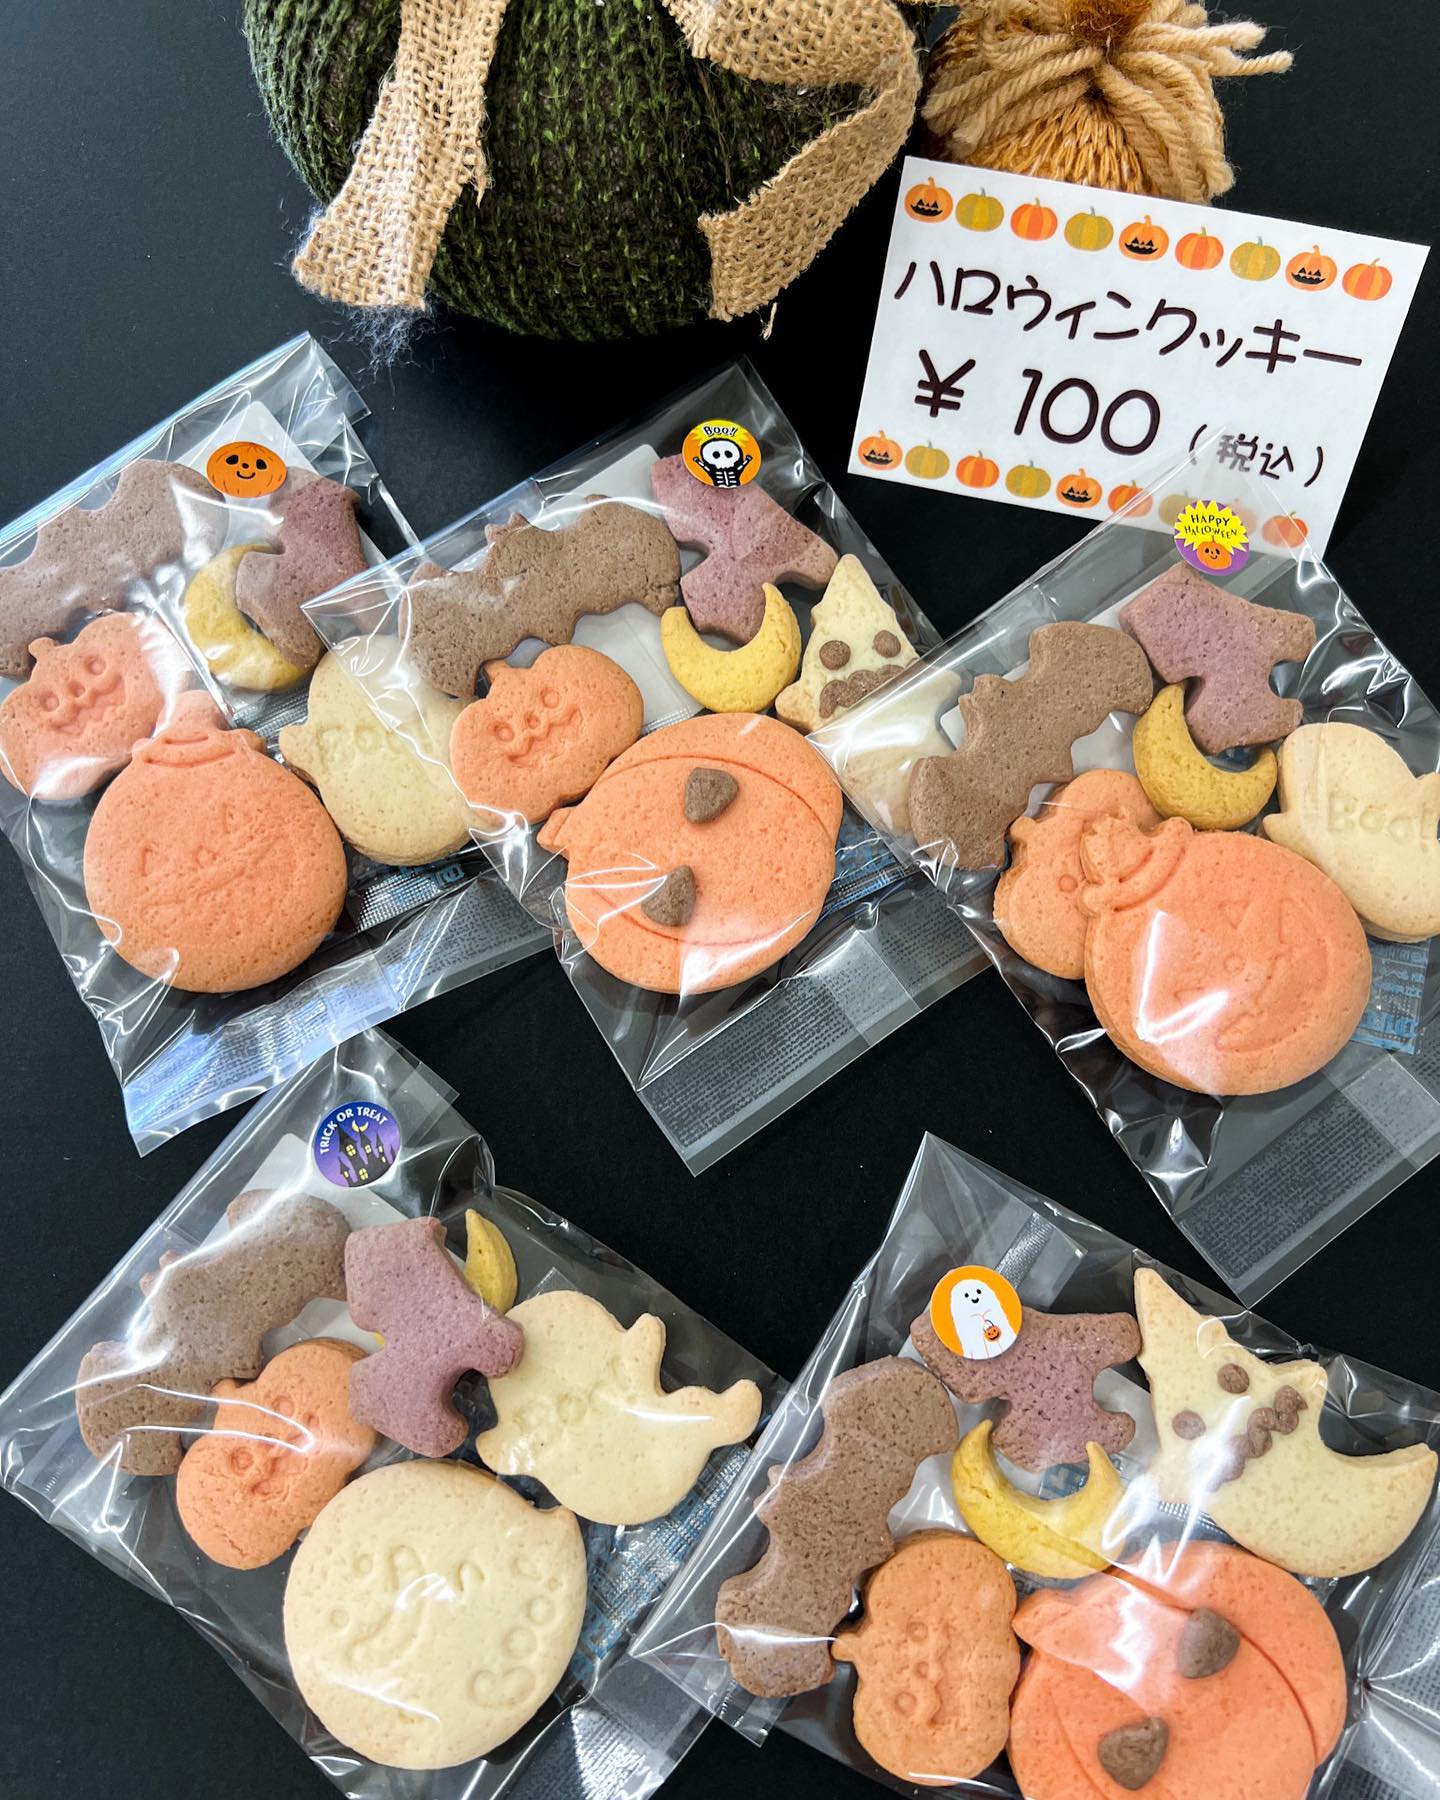 Happy Halloween！可愛いハロウィンクッキー入荷しました。今朝のお野菜はほとんど売れてしまいましたが、金時生姜、枝豆、冬瓜、玉子、お豆腐、苗〈ブロッコリー、ニンニク〉あります！ご来店お待ちしてます🤗#新鮮野菜 #ハロウィンクッキー #苗 #神戸町 #太陽キューヴ